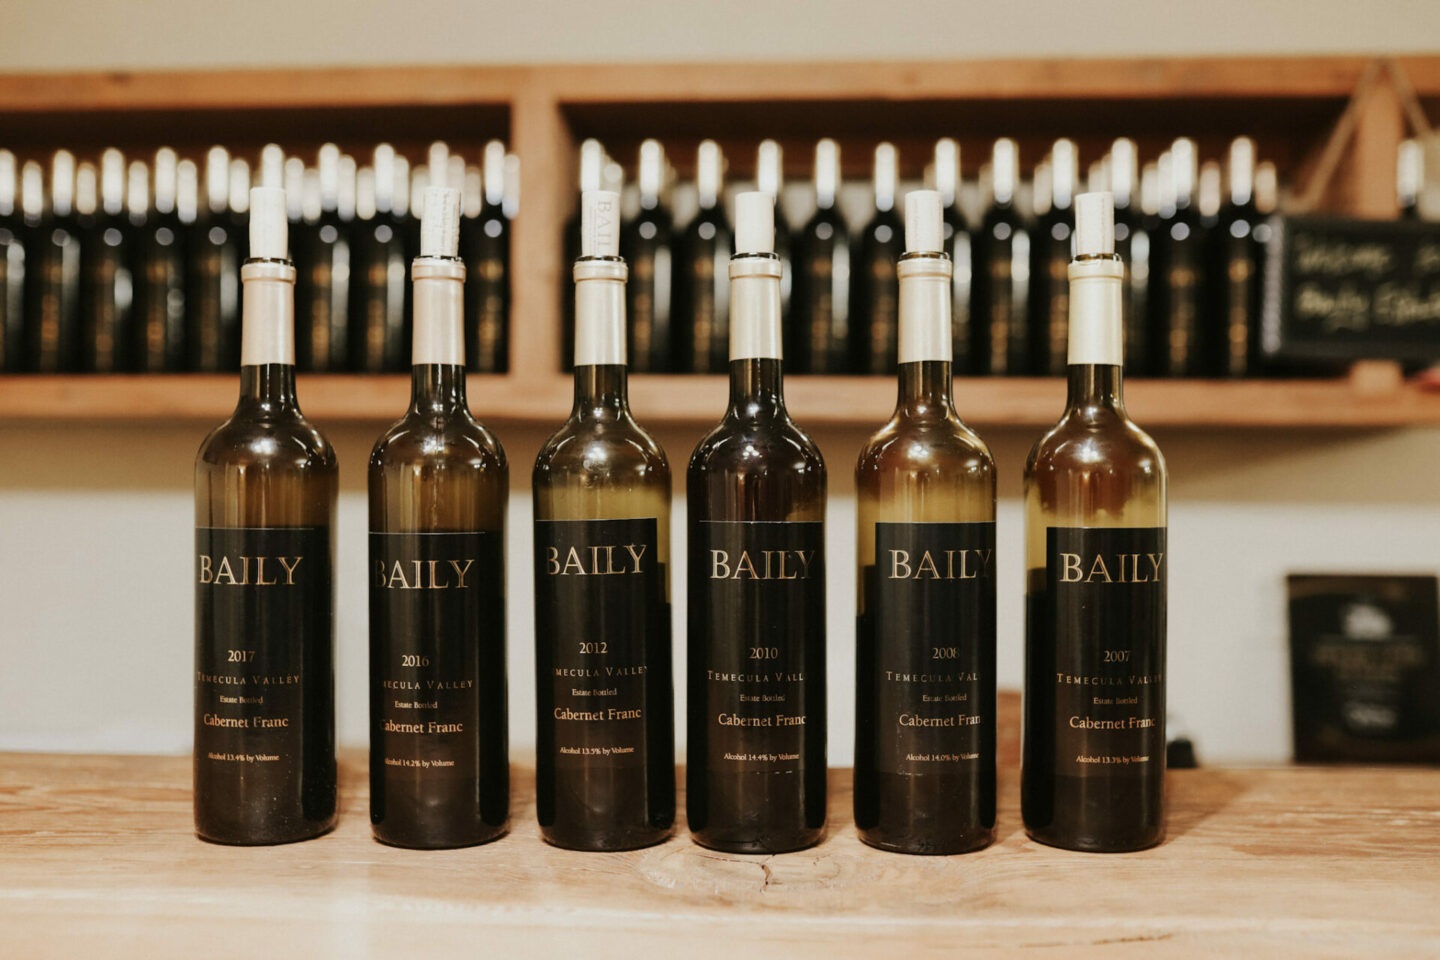 Bailey vertical tasting - 2007 to 2017 Cabernet Franc wine bottles